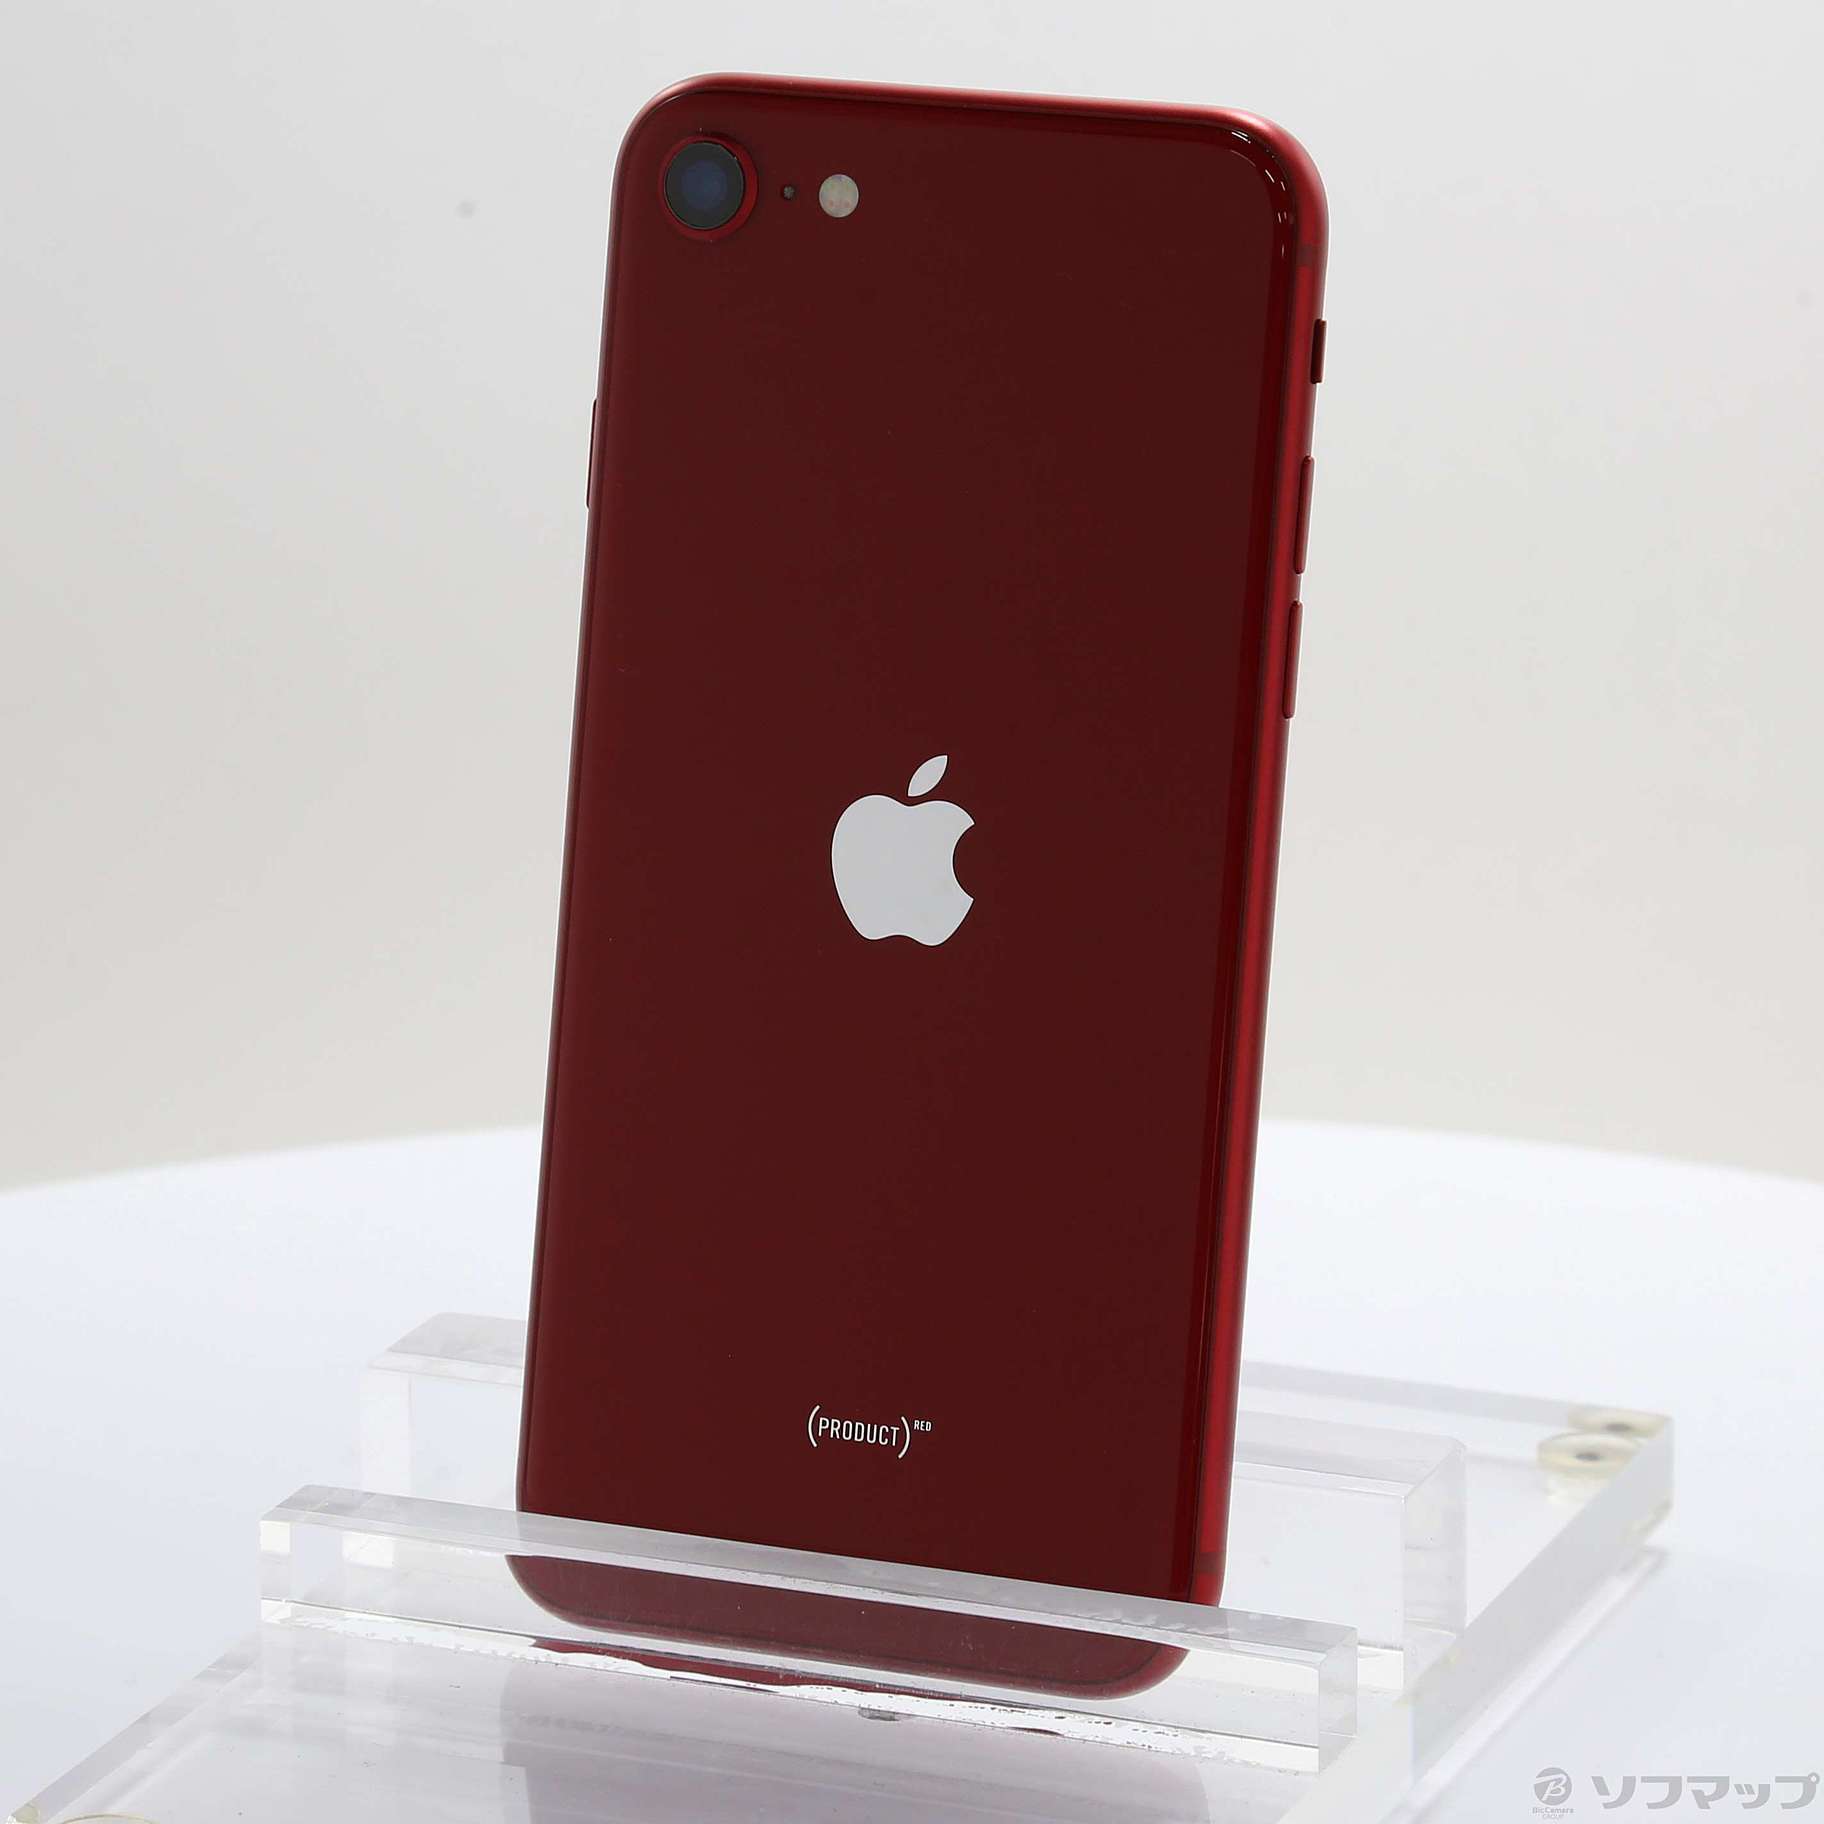 iPhone SE第3世代  (PRODUCT)RED 64GBその他写真で参照お願い致します